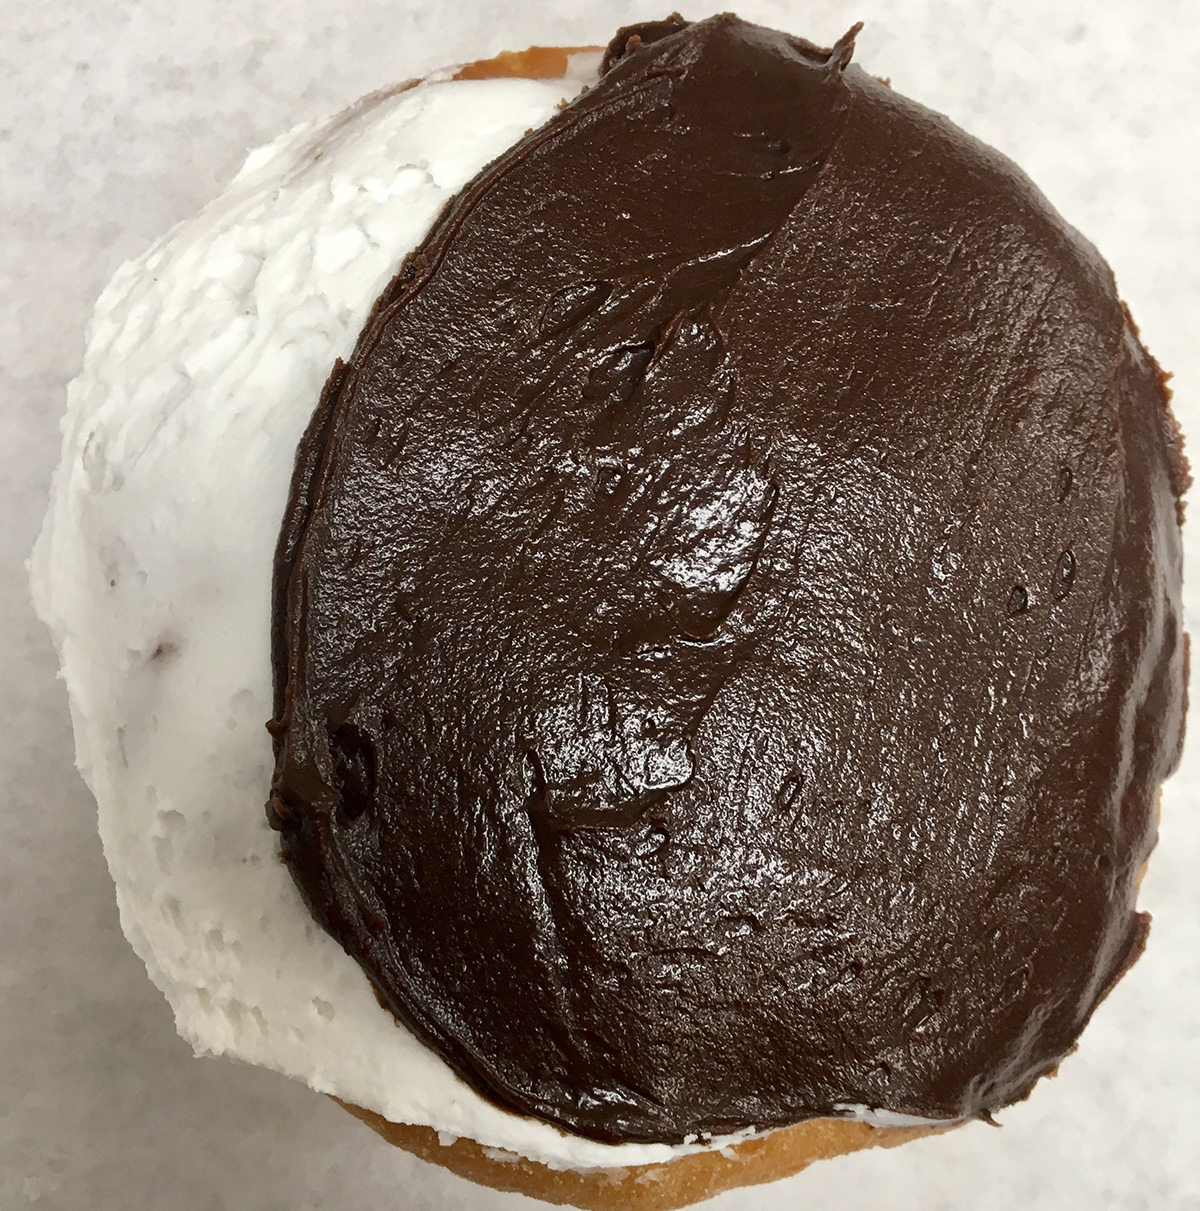 Kane's solar eclipse Boston cream doughnut